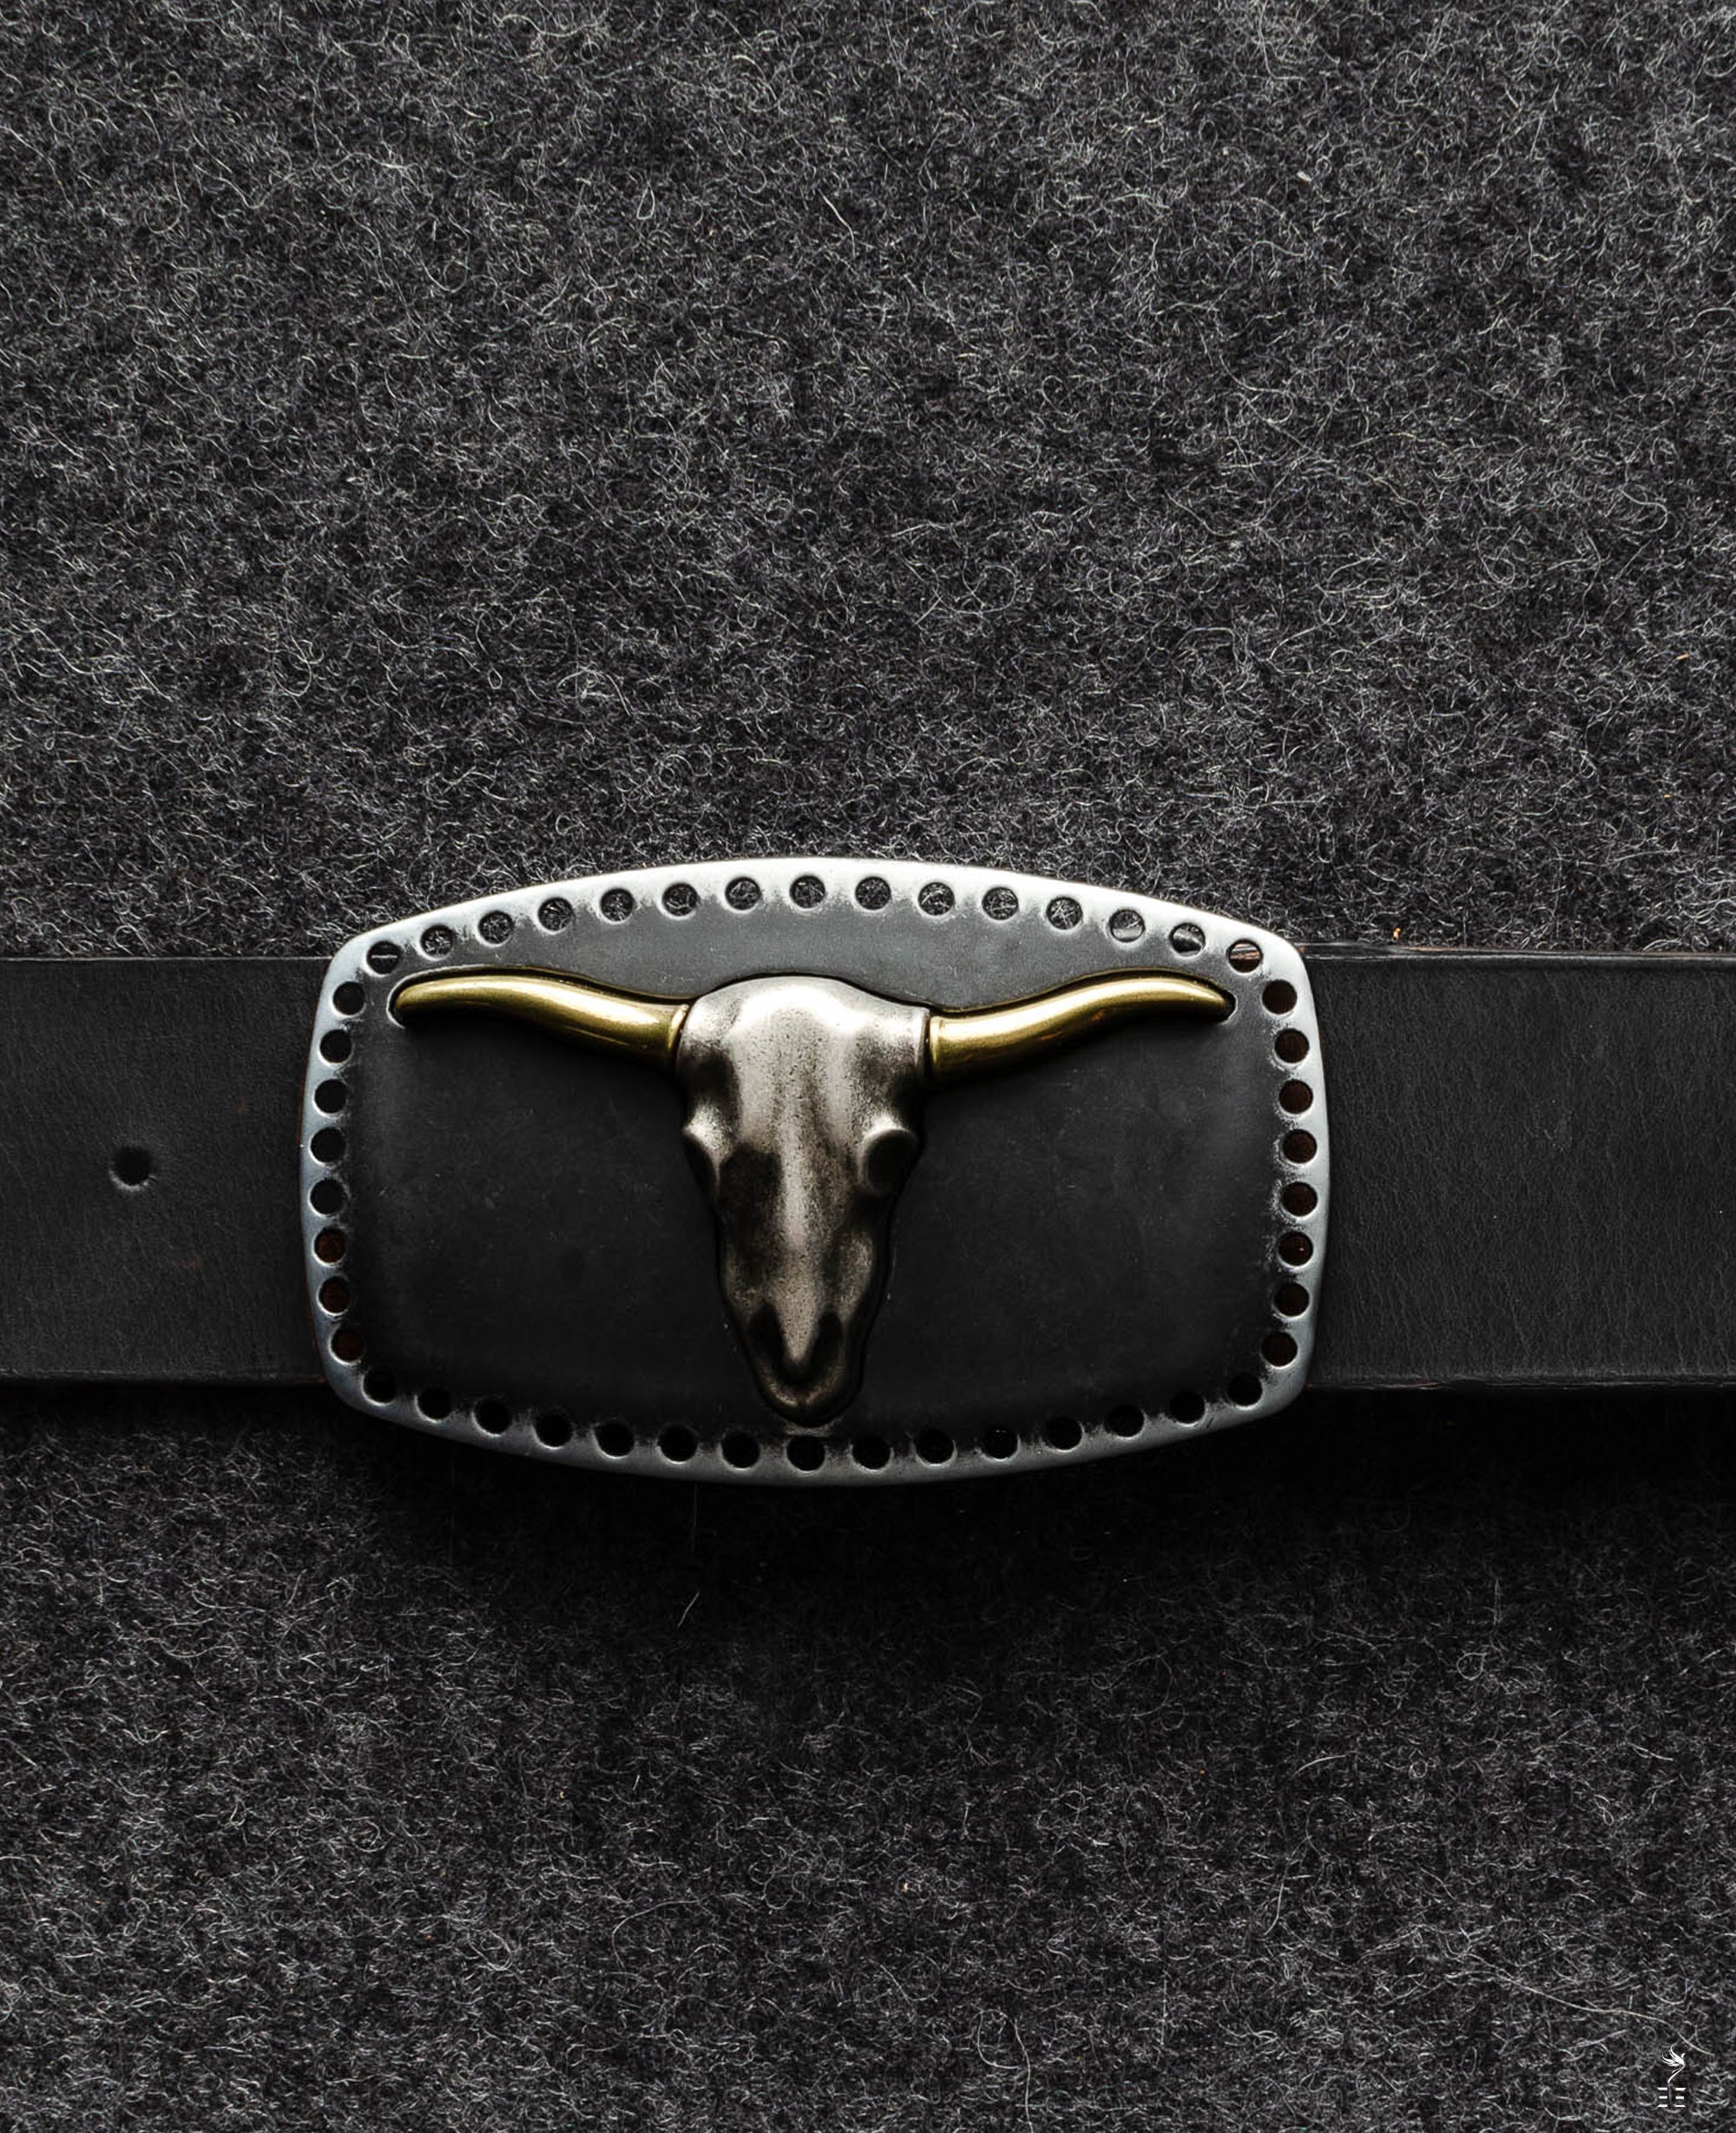 Boucle de ceinture cow-boy | Made in France - THE ERITAGE